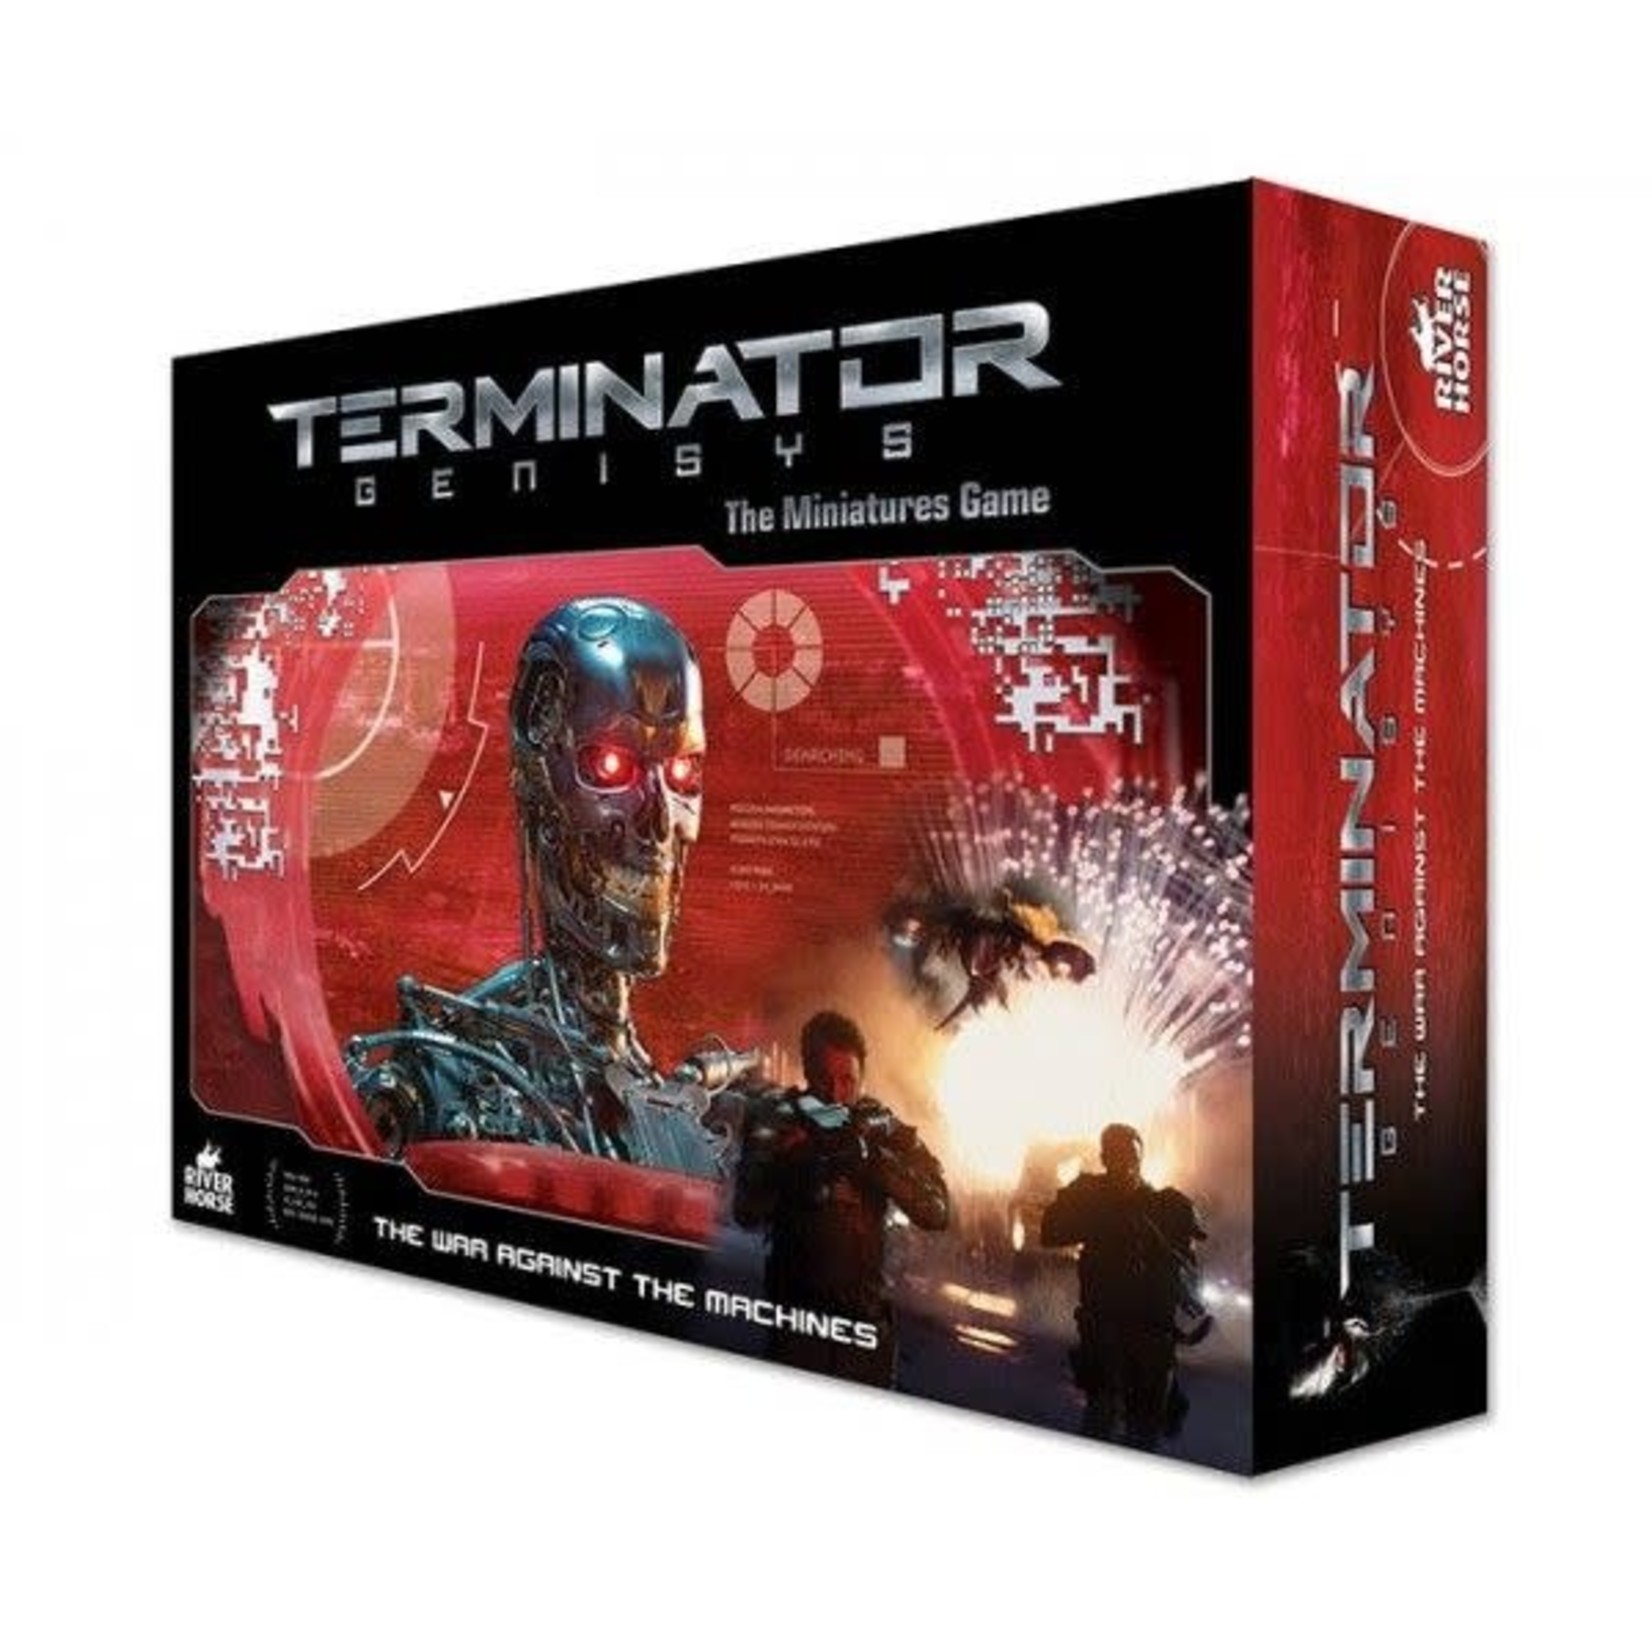 Terminator Genisys: Battle for the Future